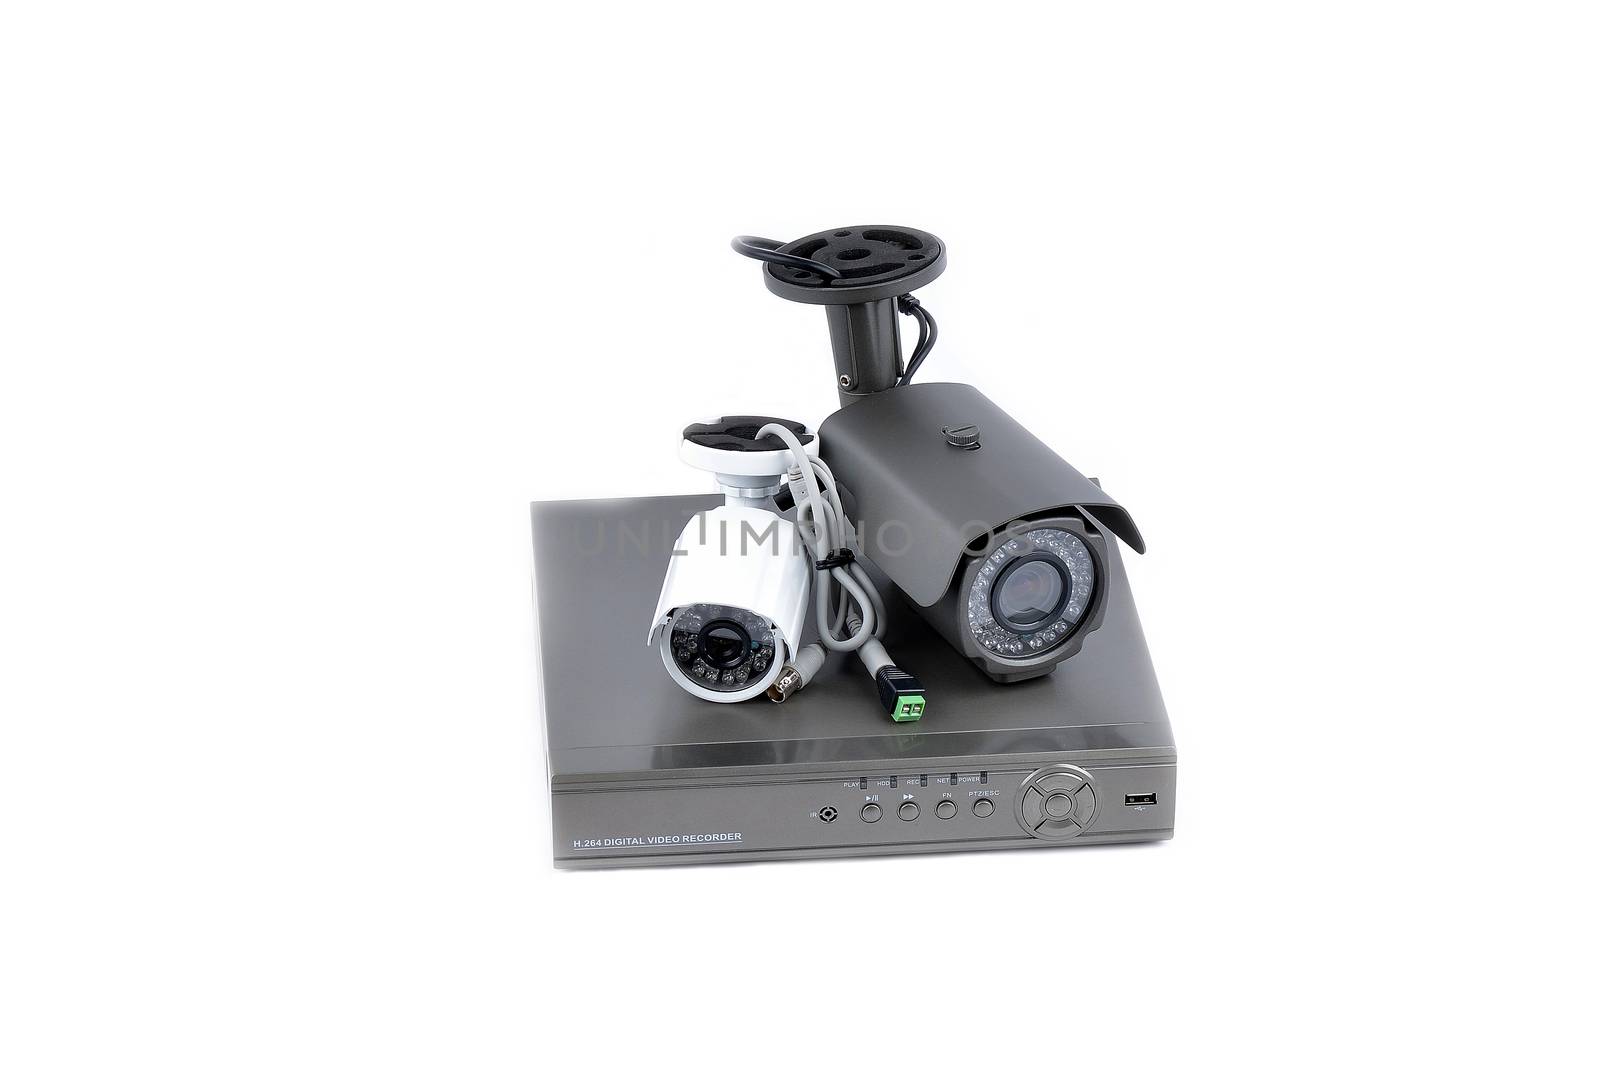 Digital Video Recorder and video surveillance cameras by constantinhurghea